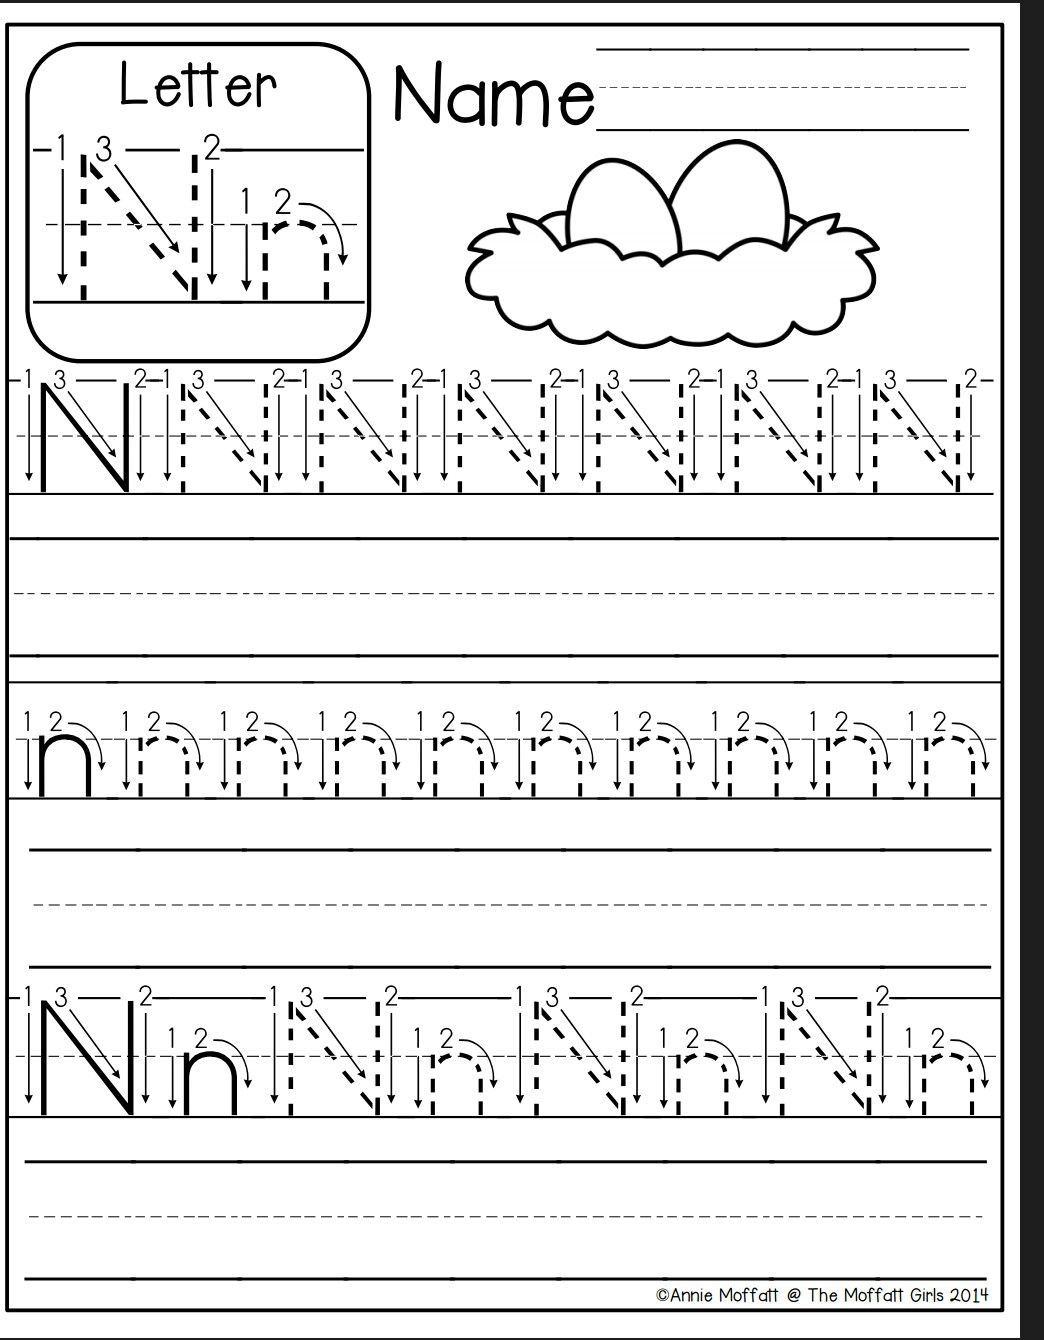 Letter N Worksheet | Letter N Worksheet throughout Letter Nn Worksheets For Preschool